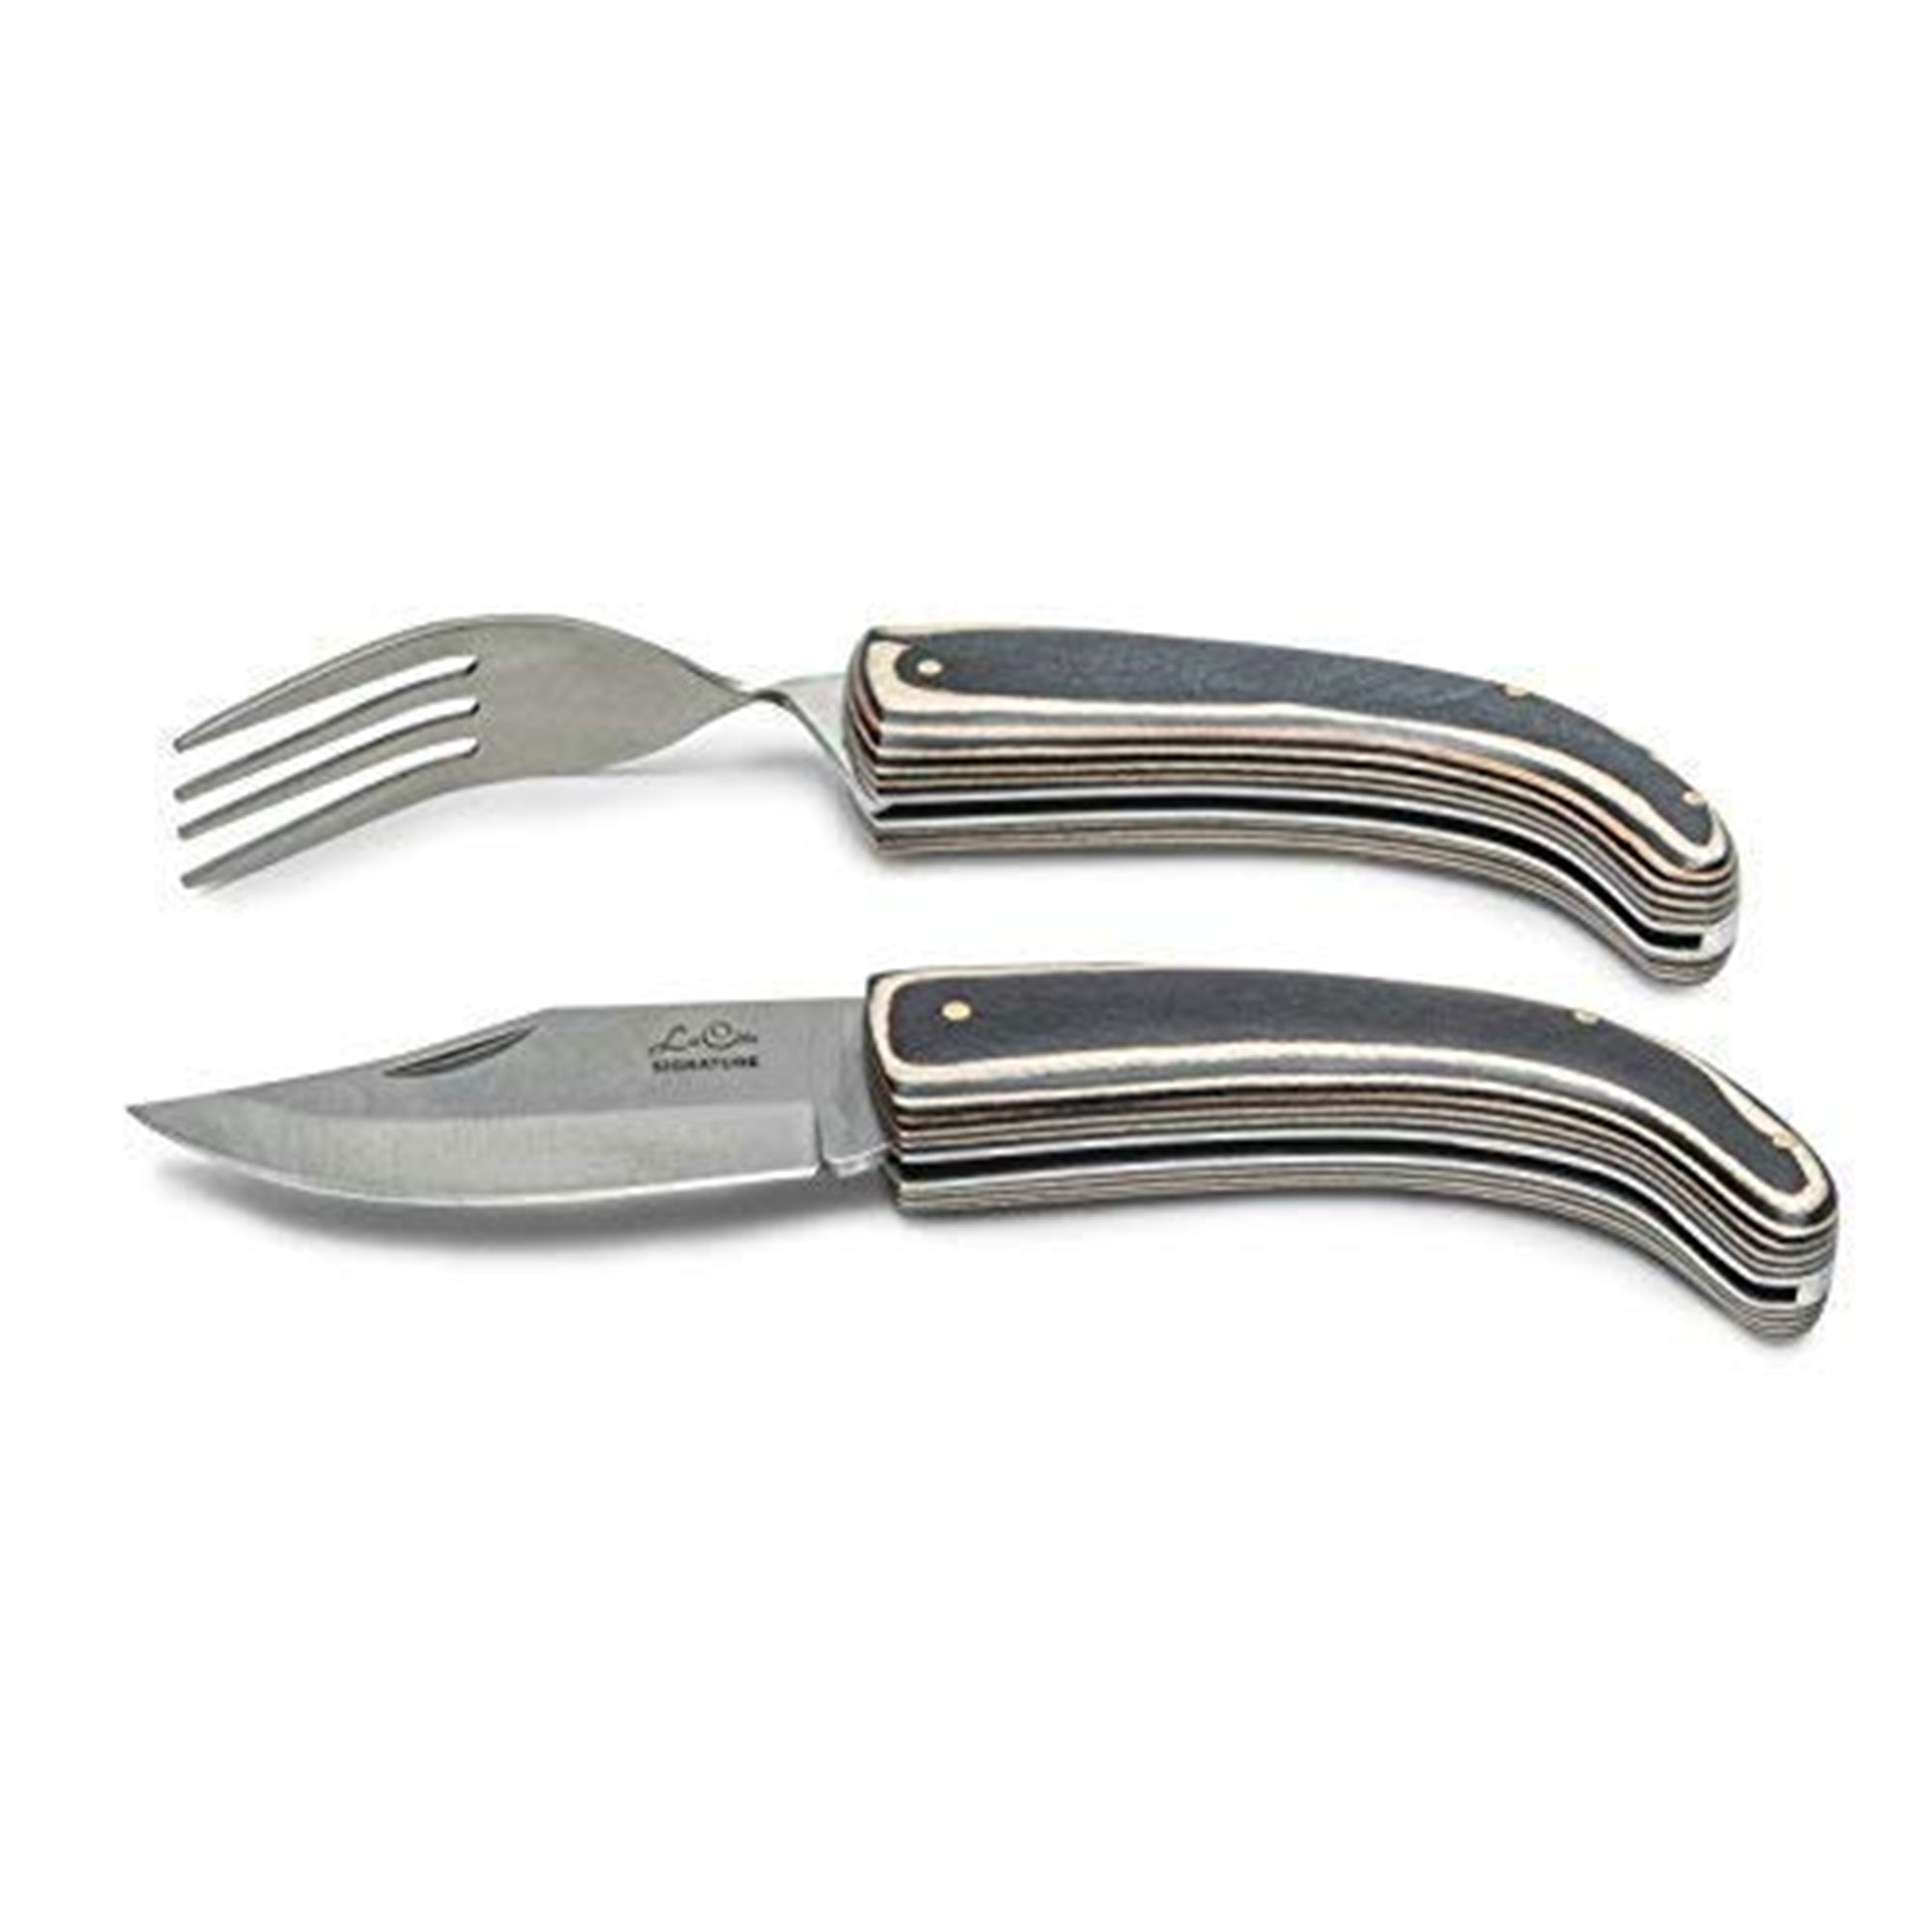 La Cote Premium Folding Knife Cutlery Stainless Steel Blade Wood Handle (Pakka Wood Steak Knife & Fork)